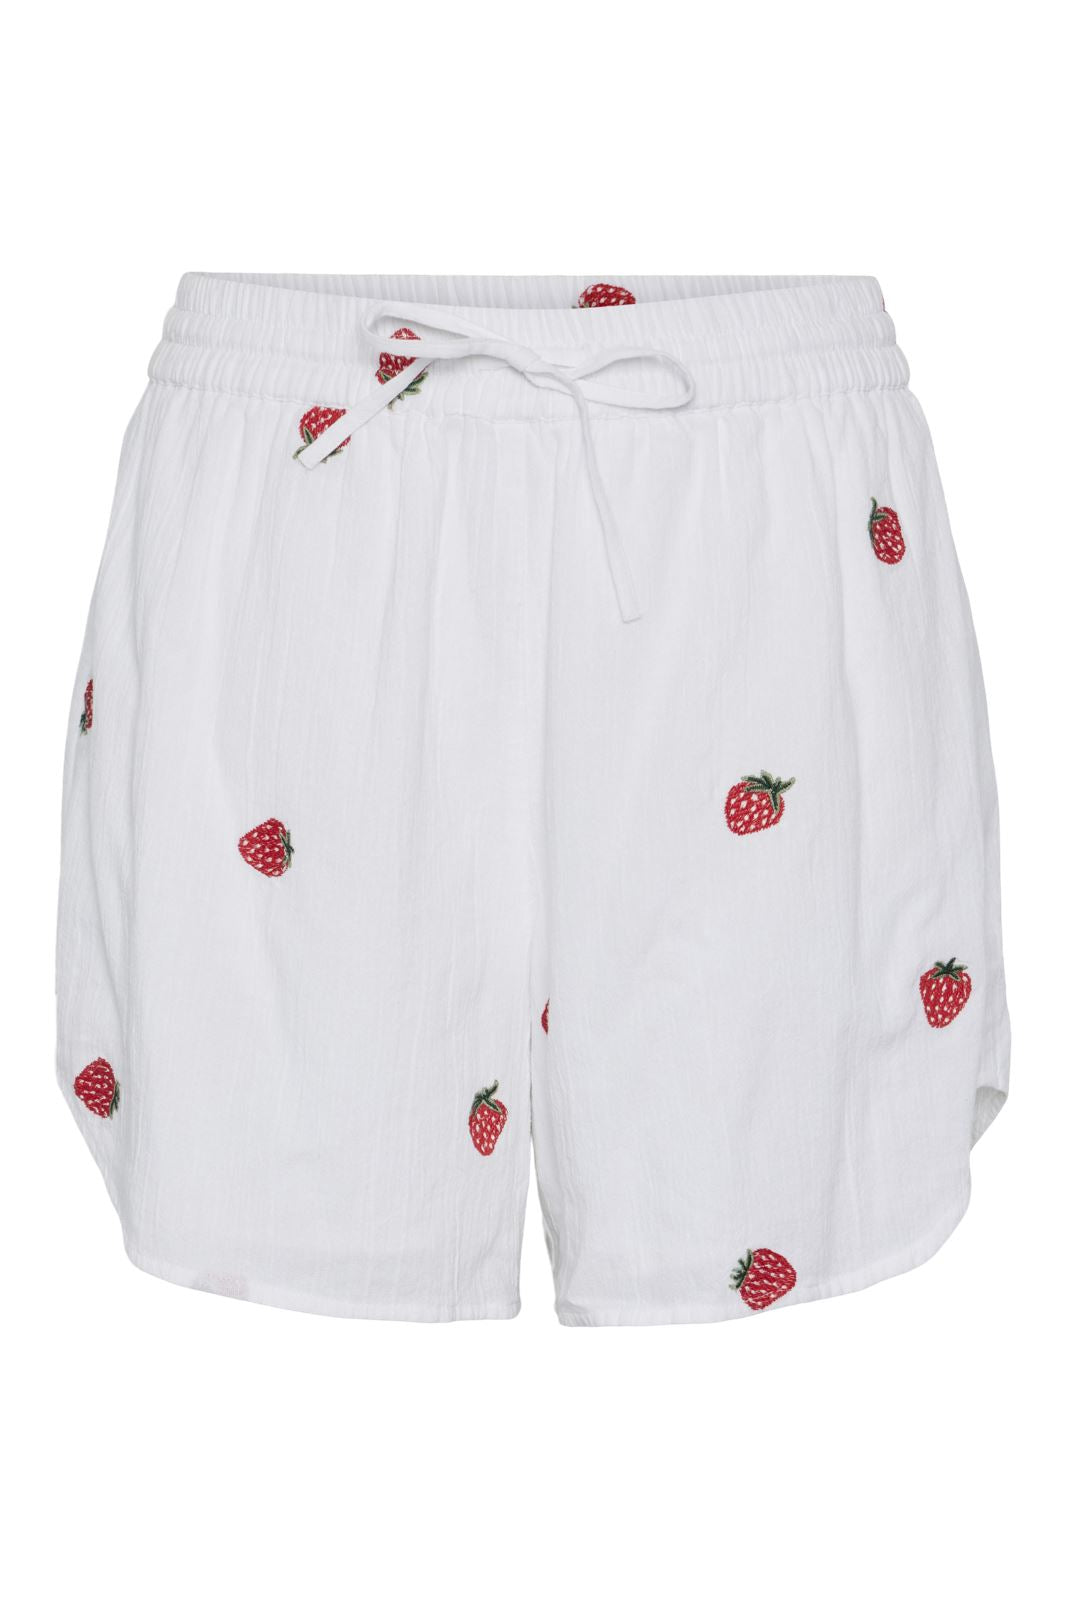 Pieces - Pcselena Shorts - 4625504 Bright White Strawberries